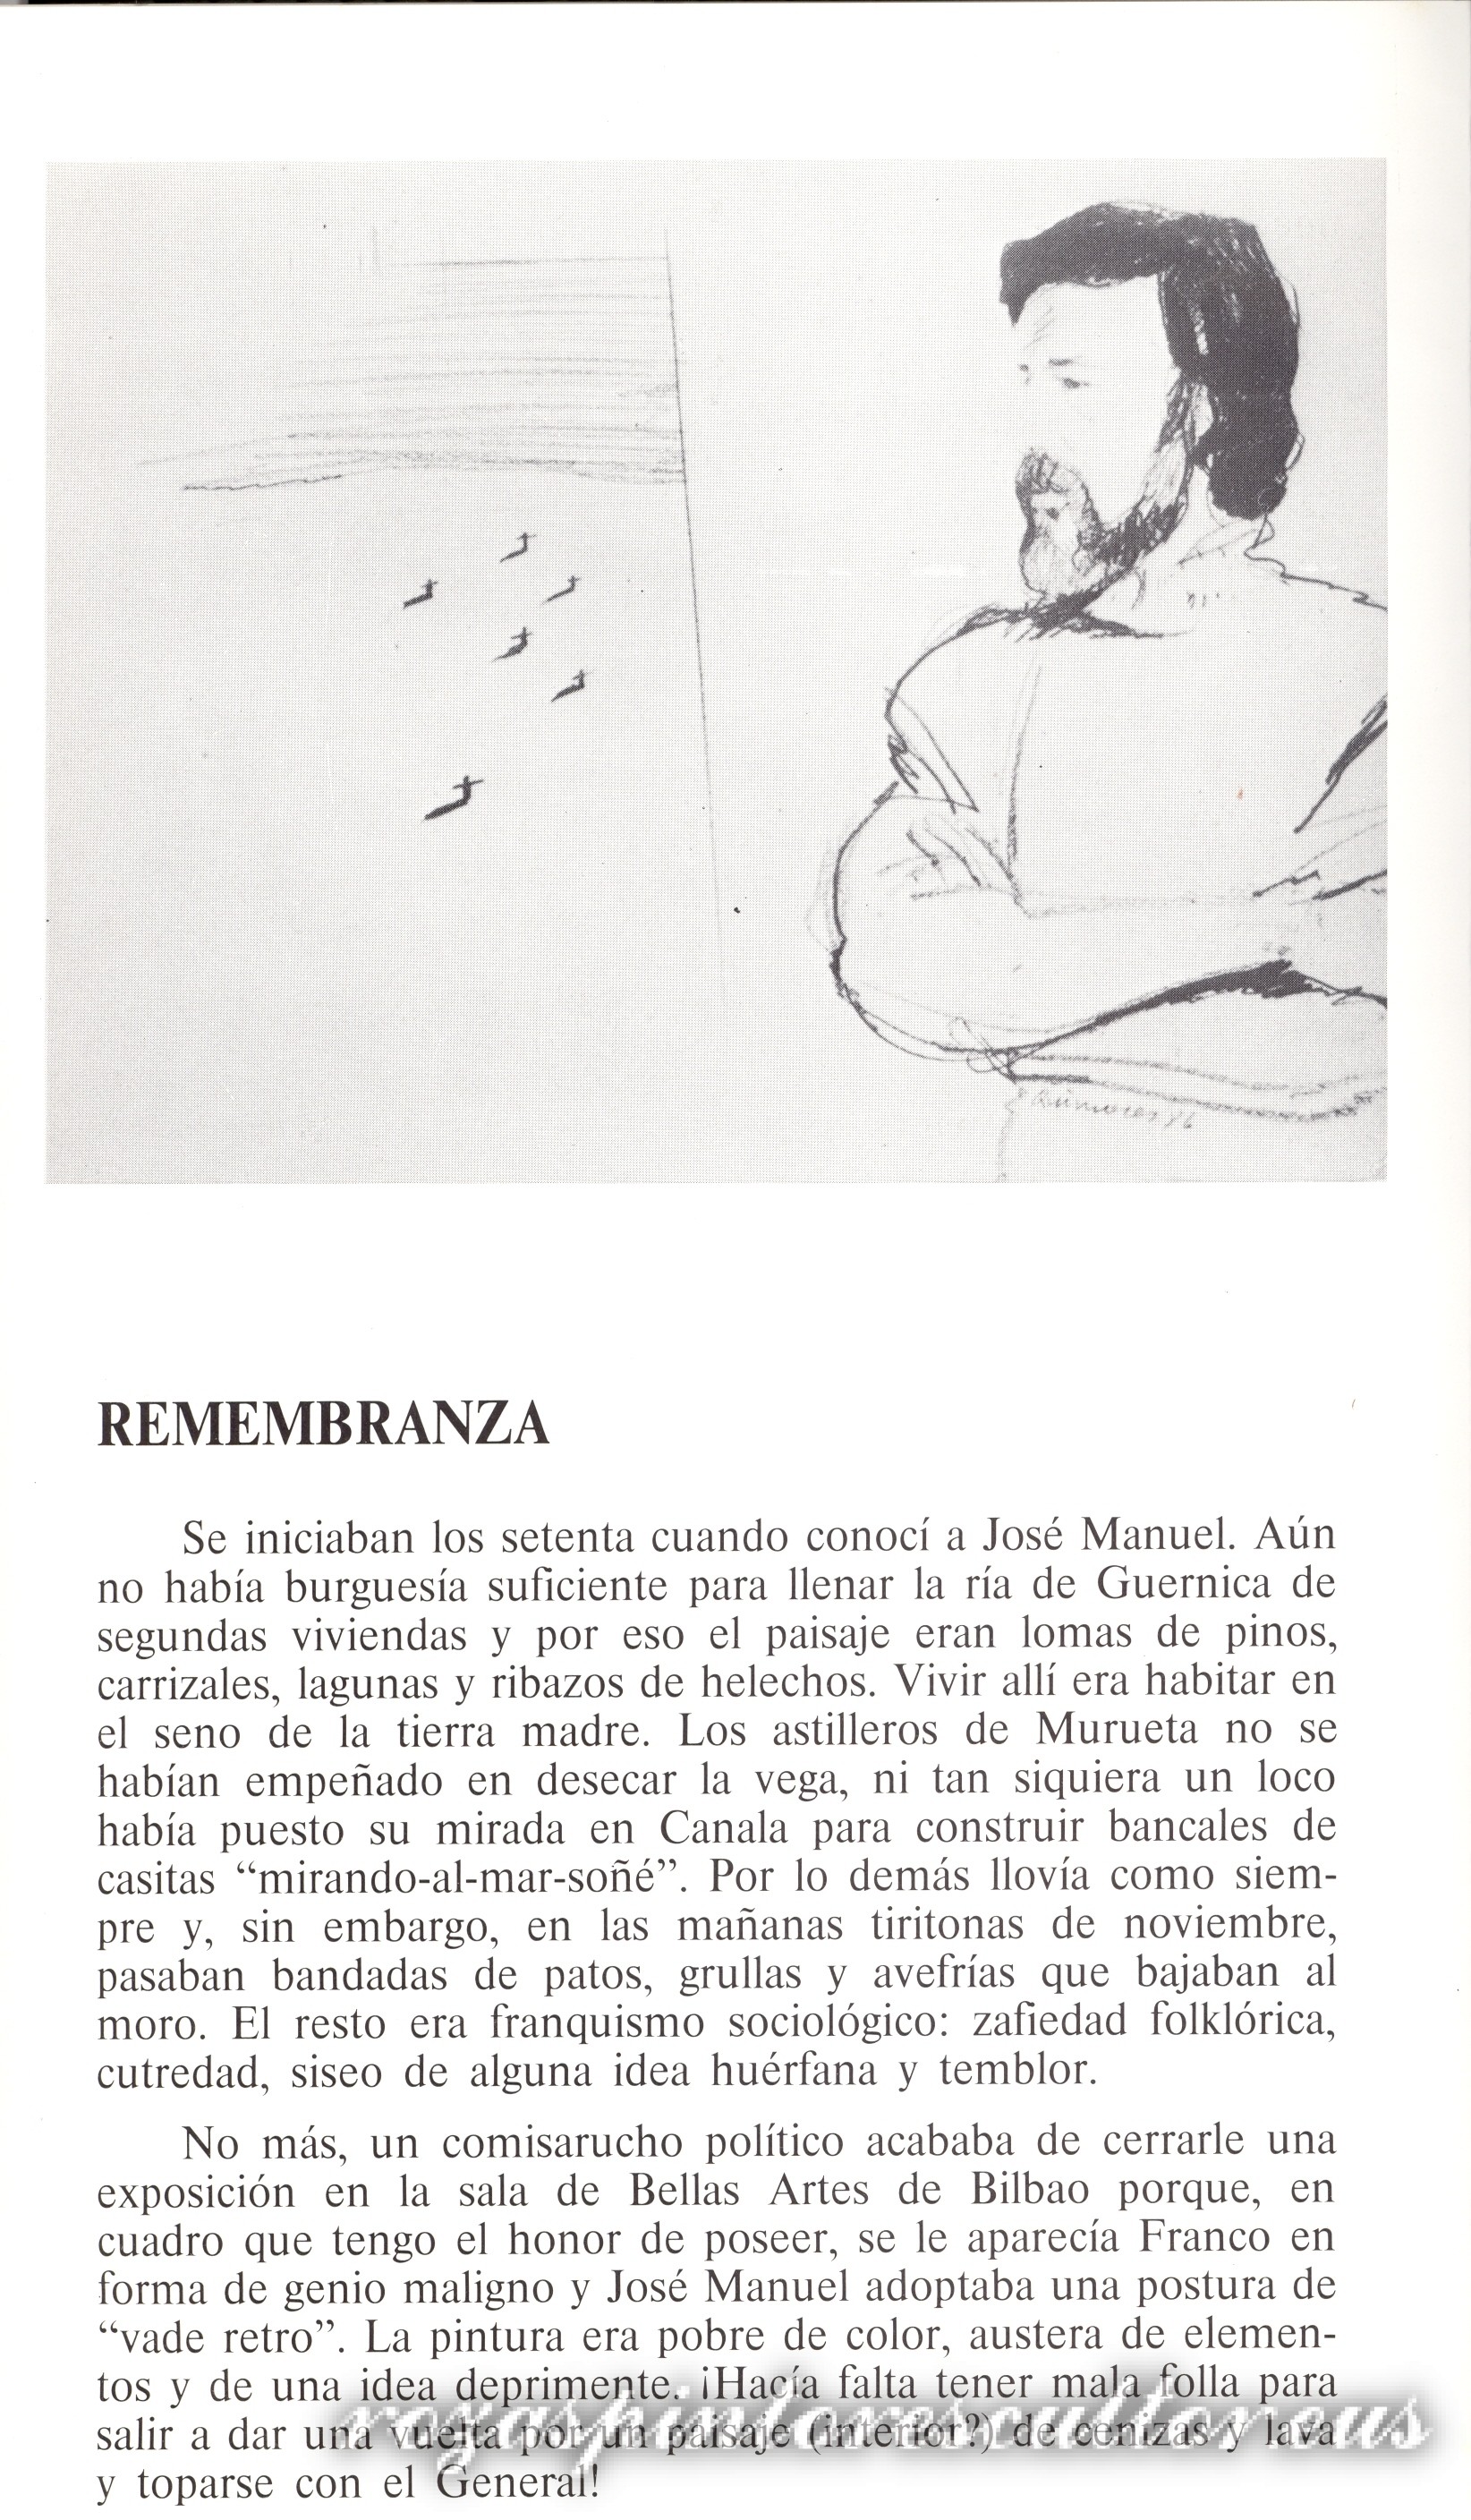 1988 Remembranza: Luis Lopez de Dicastillo